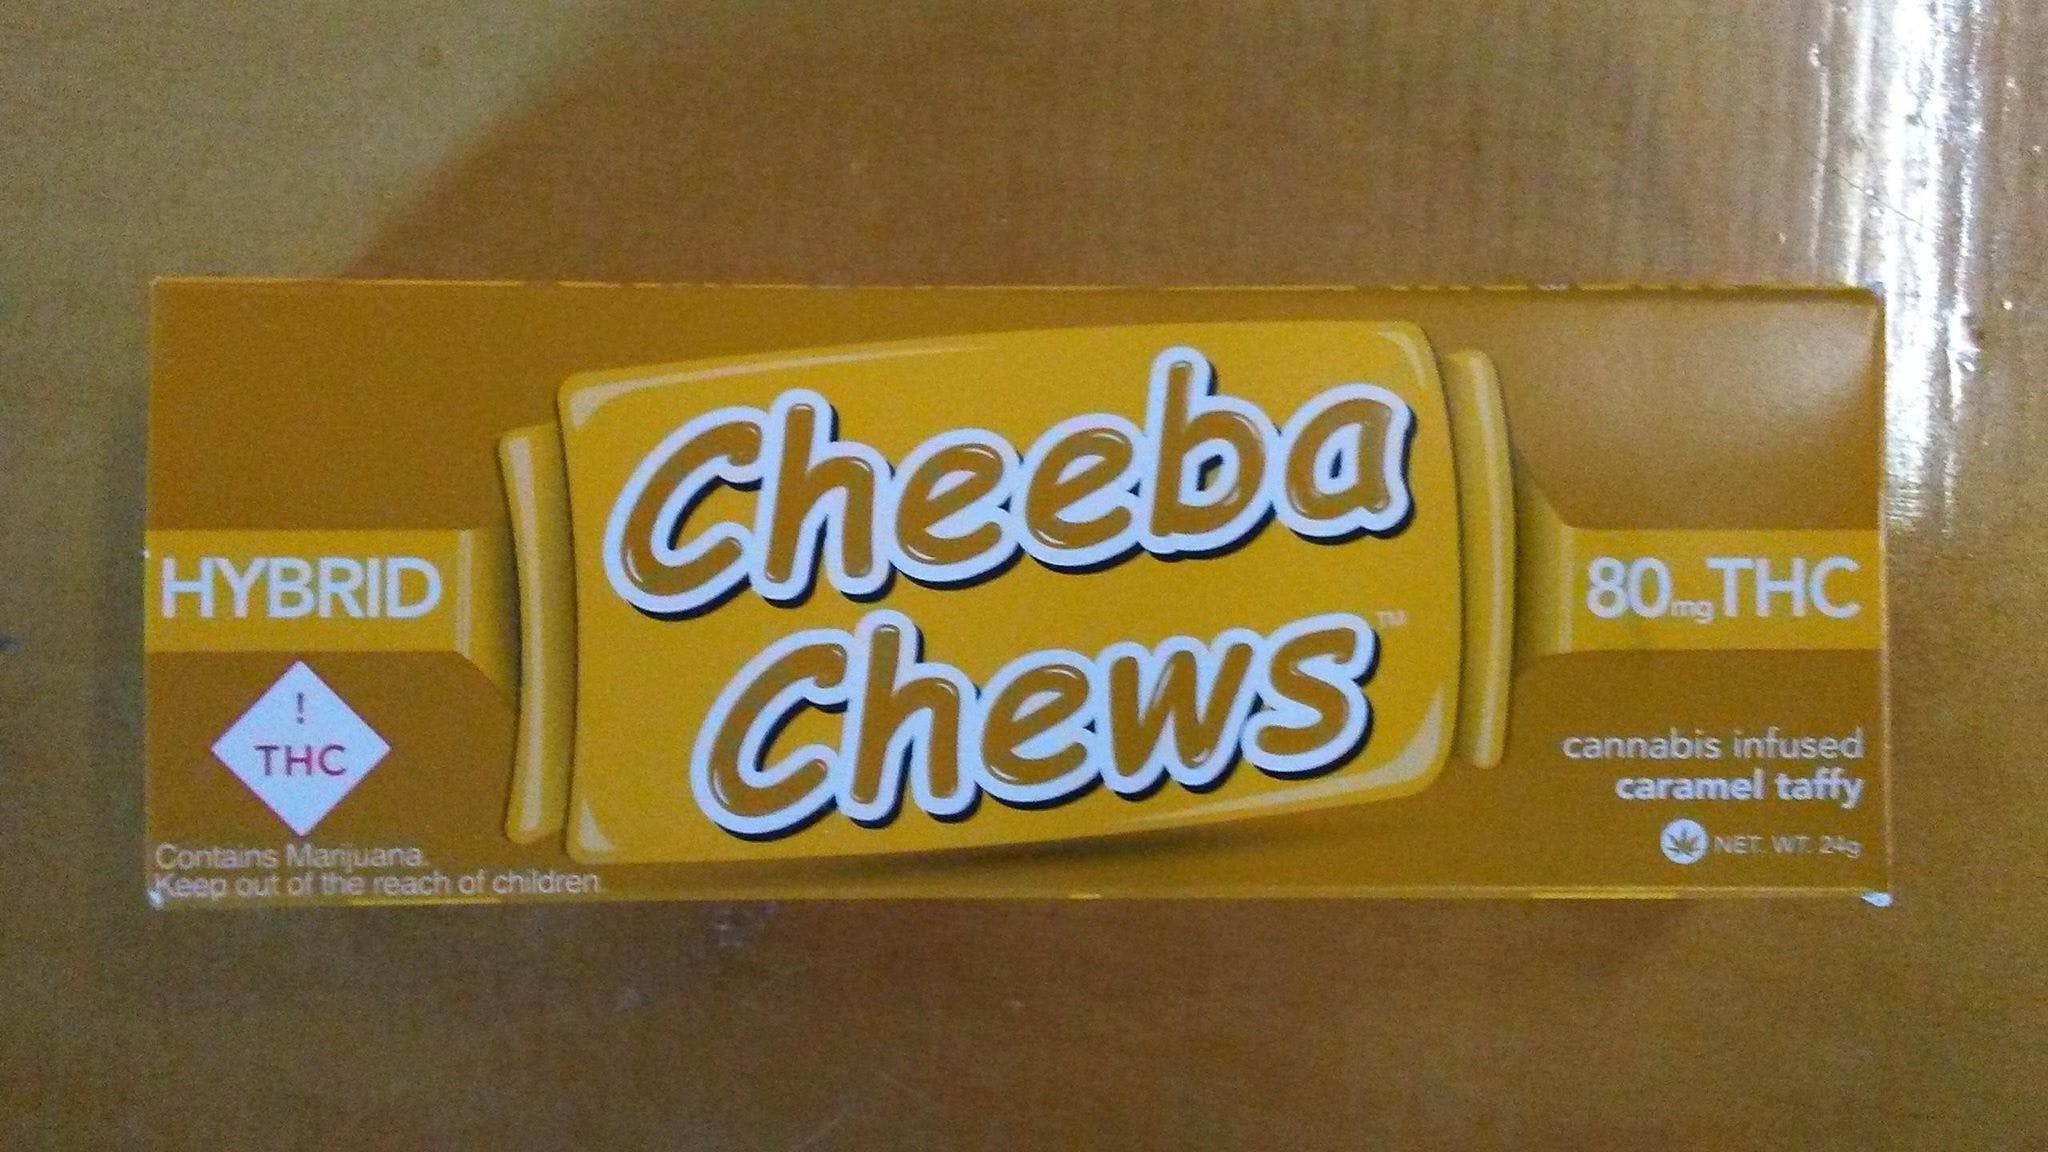 Cheeba Chews - (Hybrid) Caramel Taffy